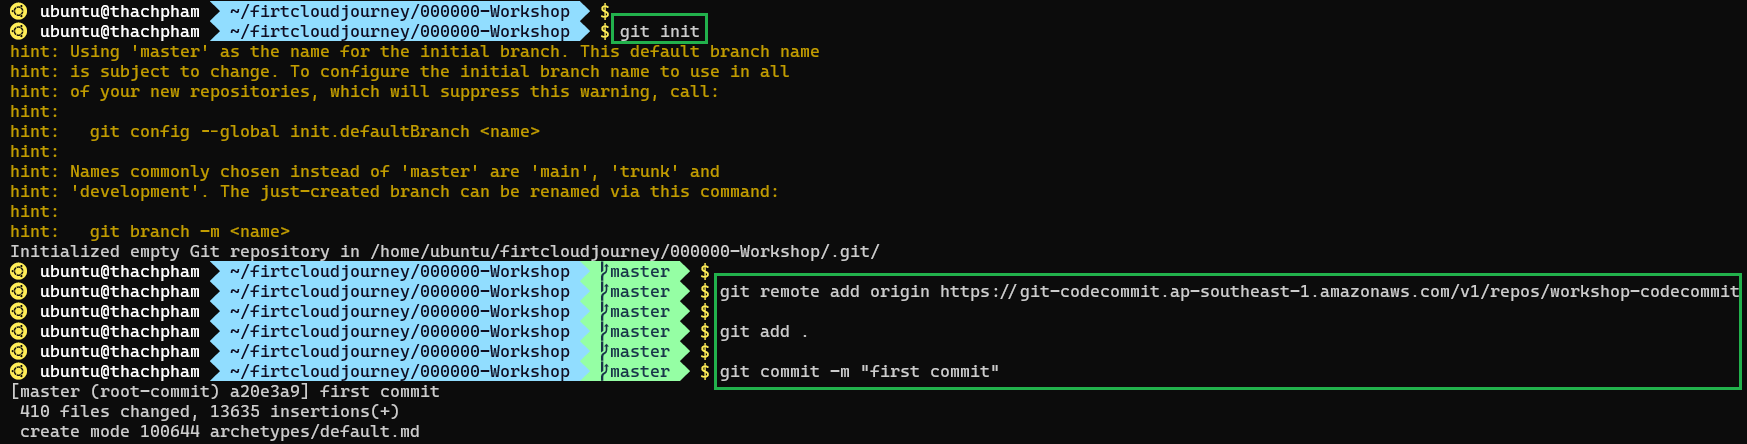 Push code to AWS CodeCommit